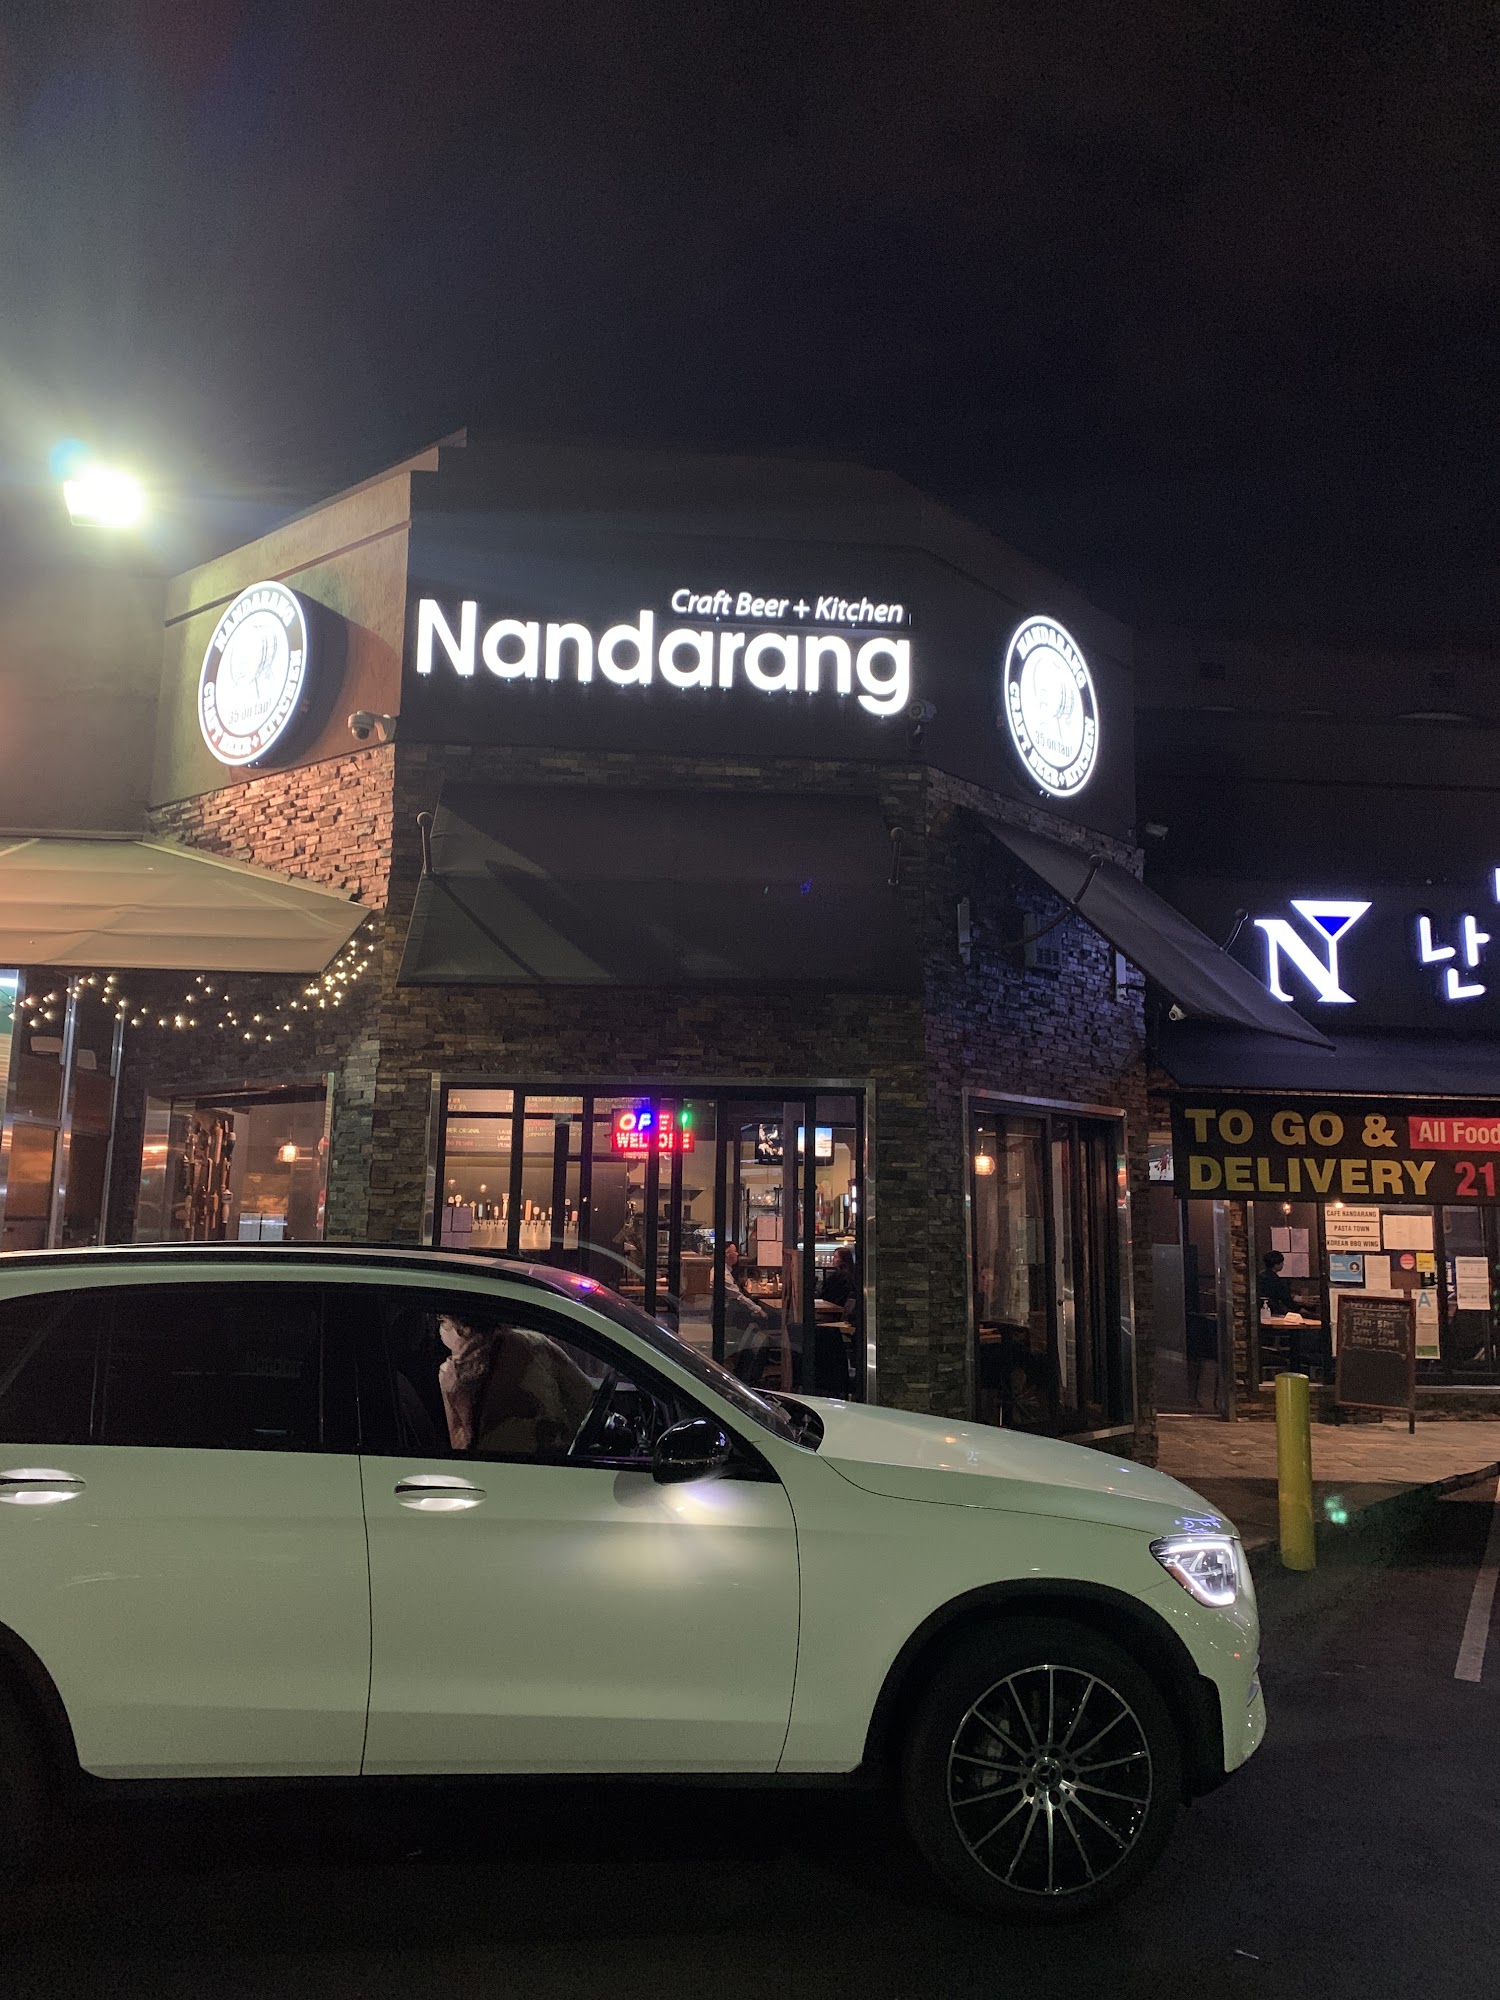 Nandarang Restaurant & Bar